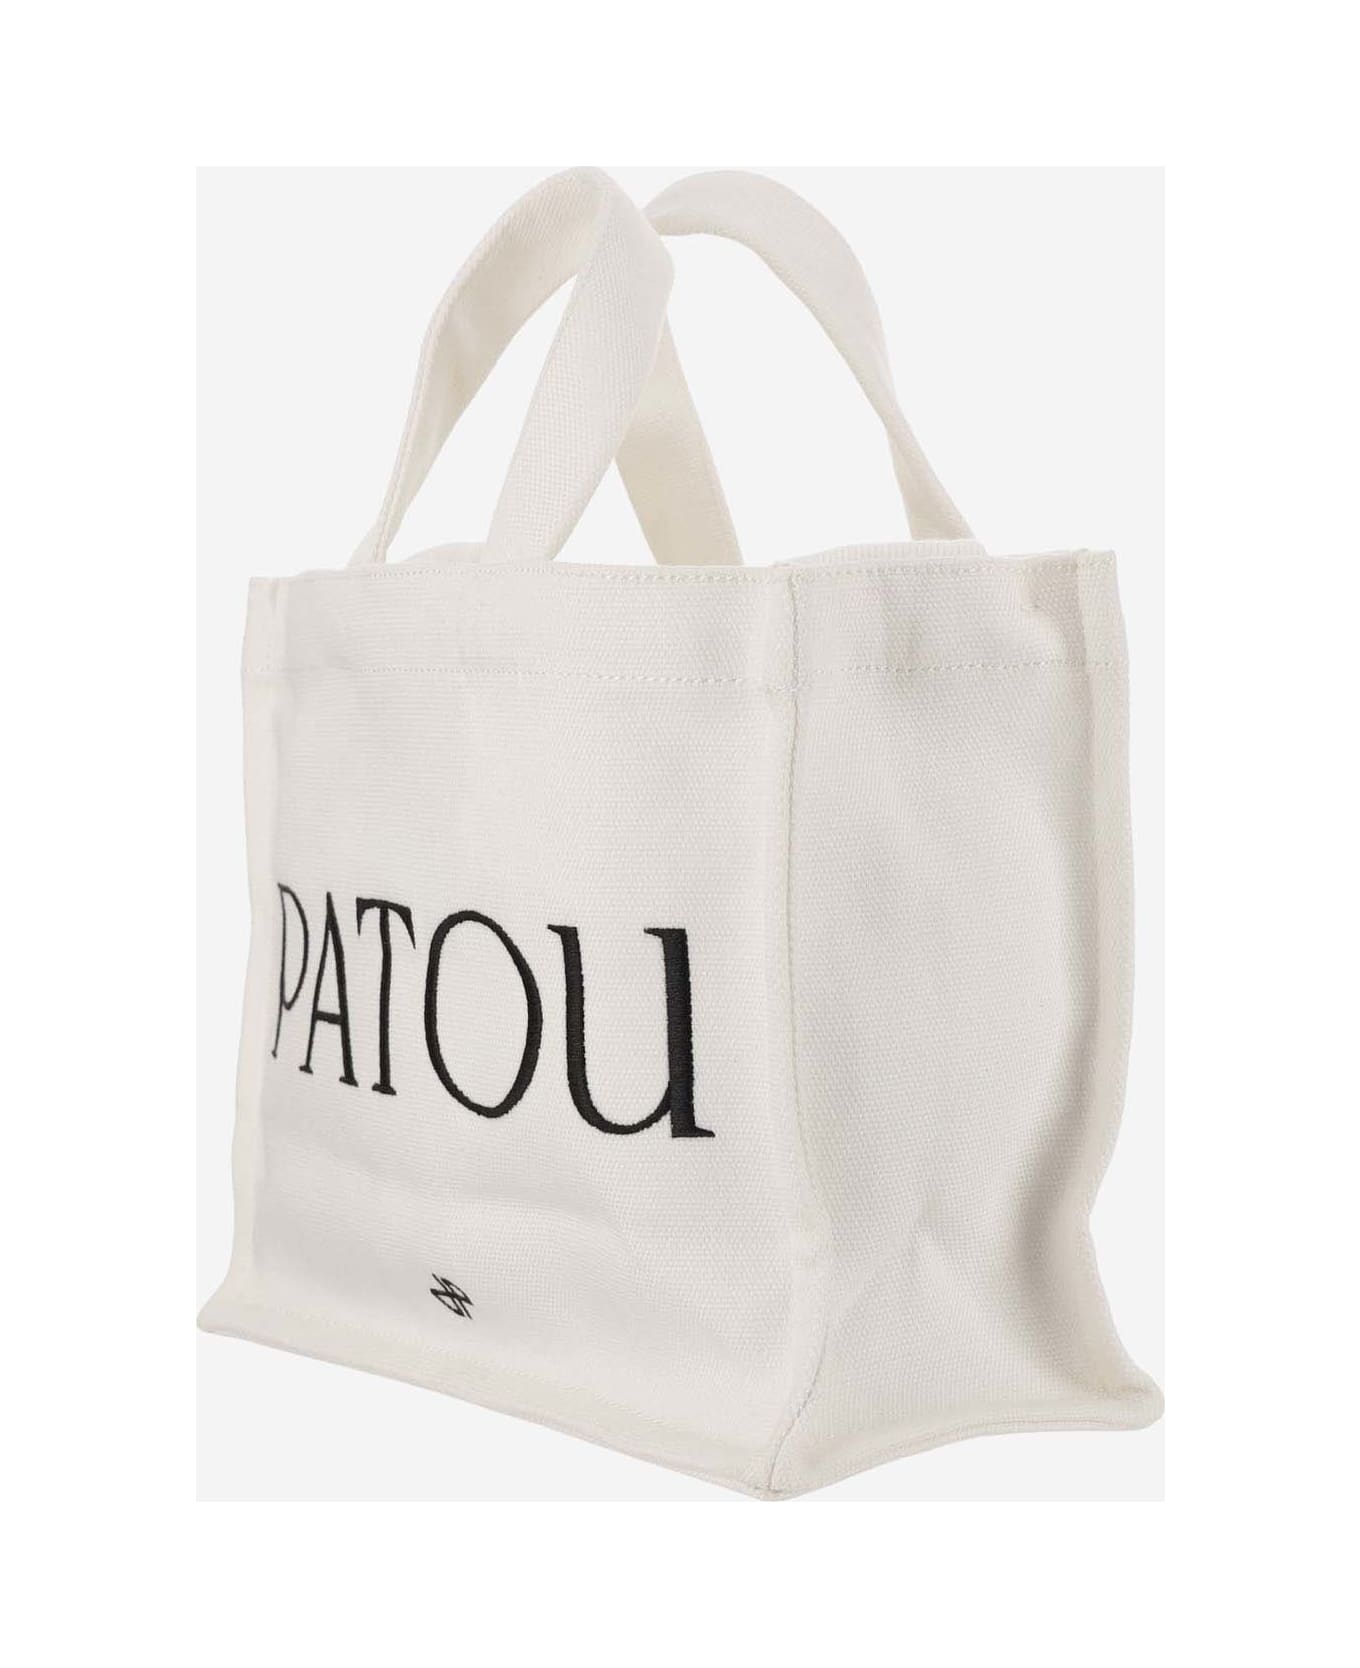 Patou Cotton Tote Bag - White